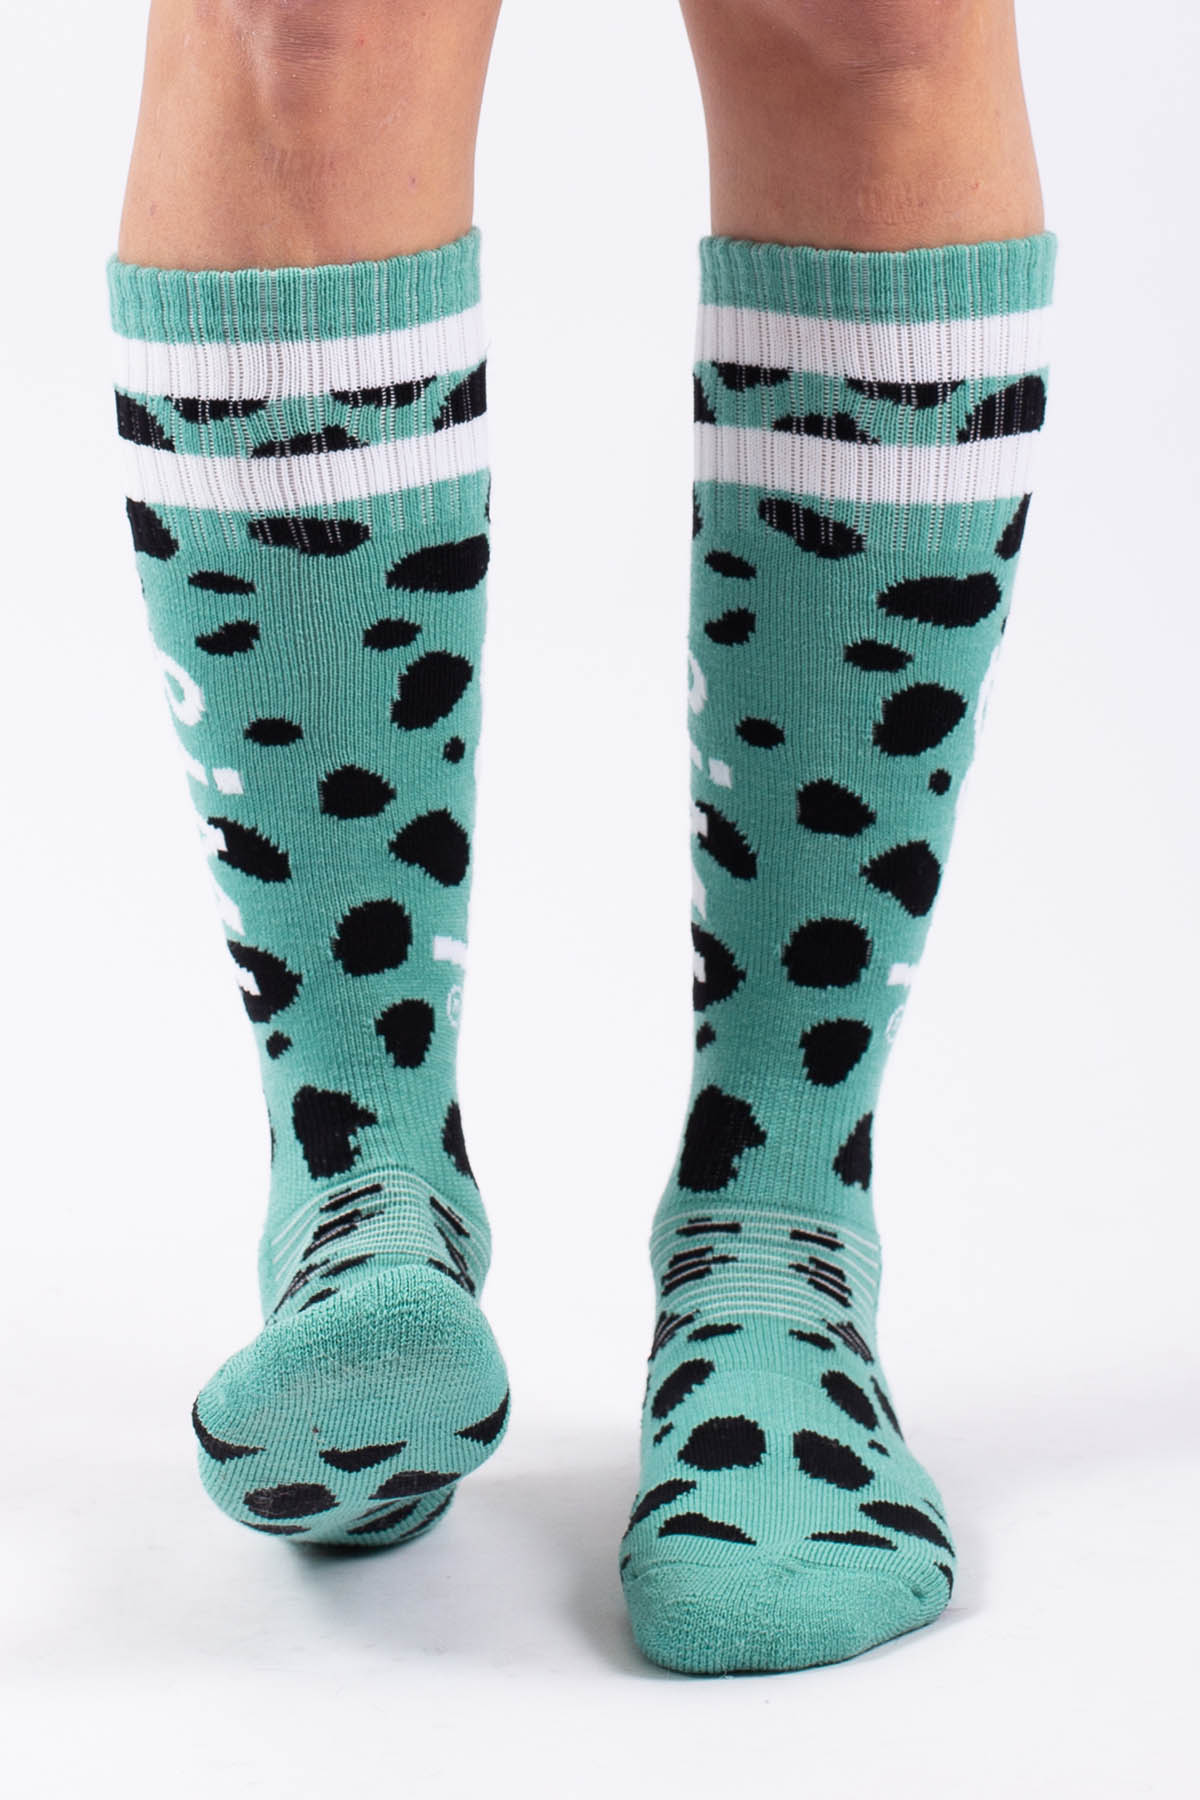 Cheerleader Wool Socks - Turquoise Cheetah | 36-38